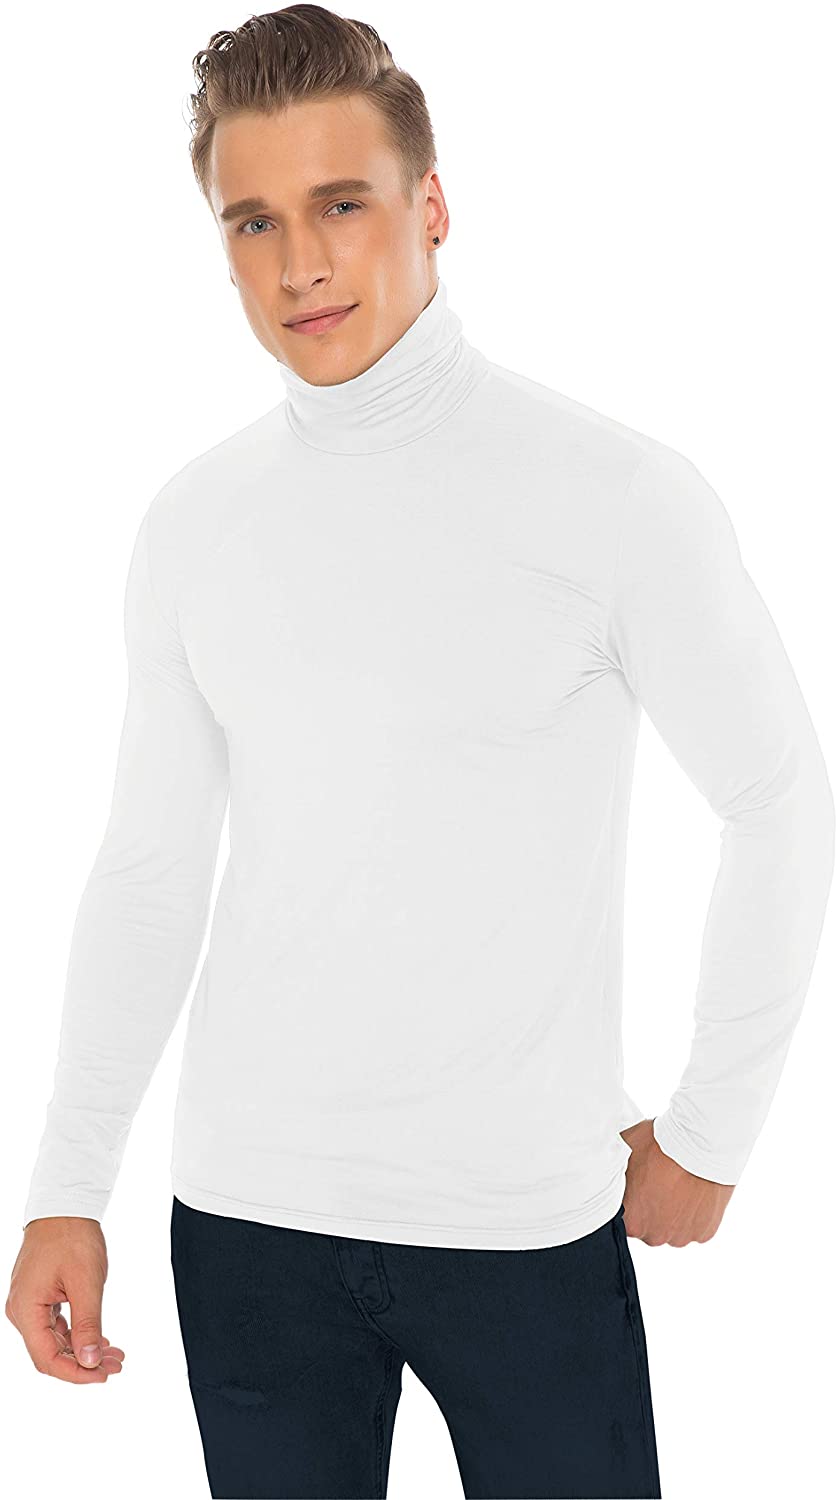 Derminpro Men's Slim Fit Soft Turtleneck Long Sleeve Pullover ...